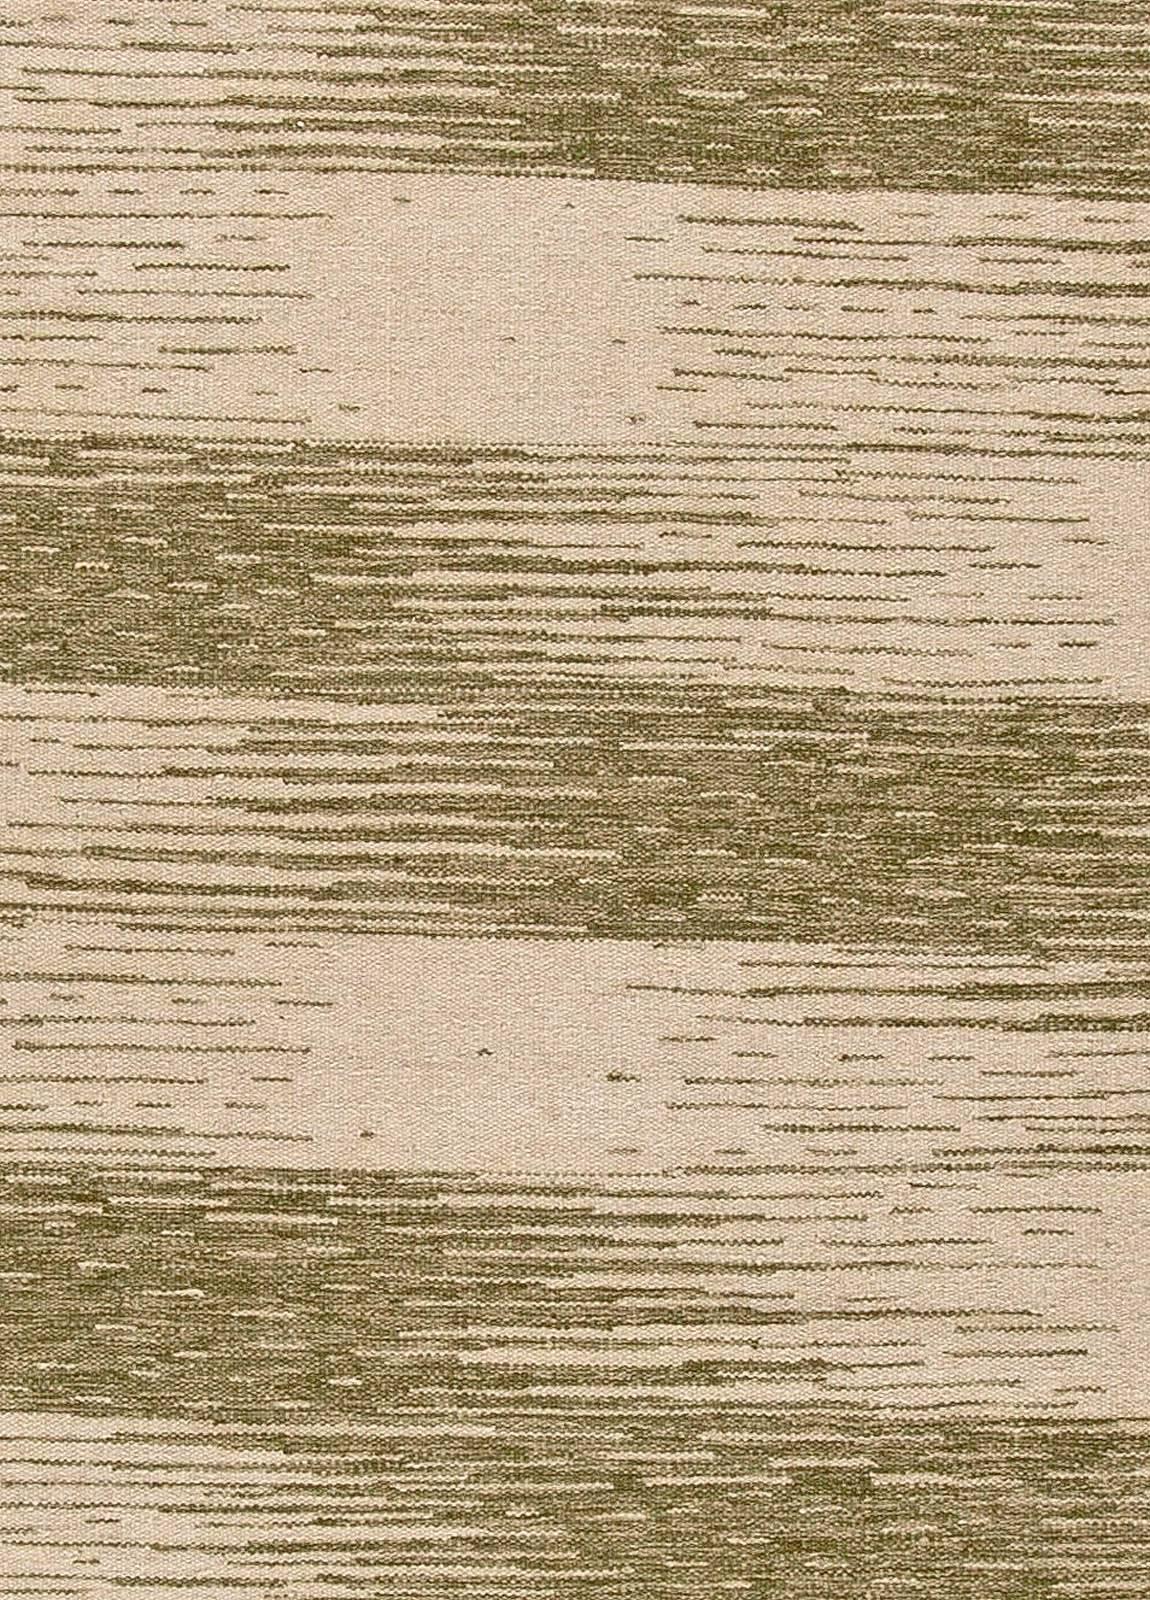 Large forel green, beige hand knotted wool rug by Doris Leslie Blau.
Size: 14'2